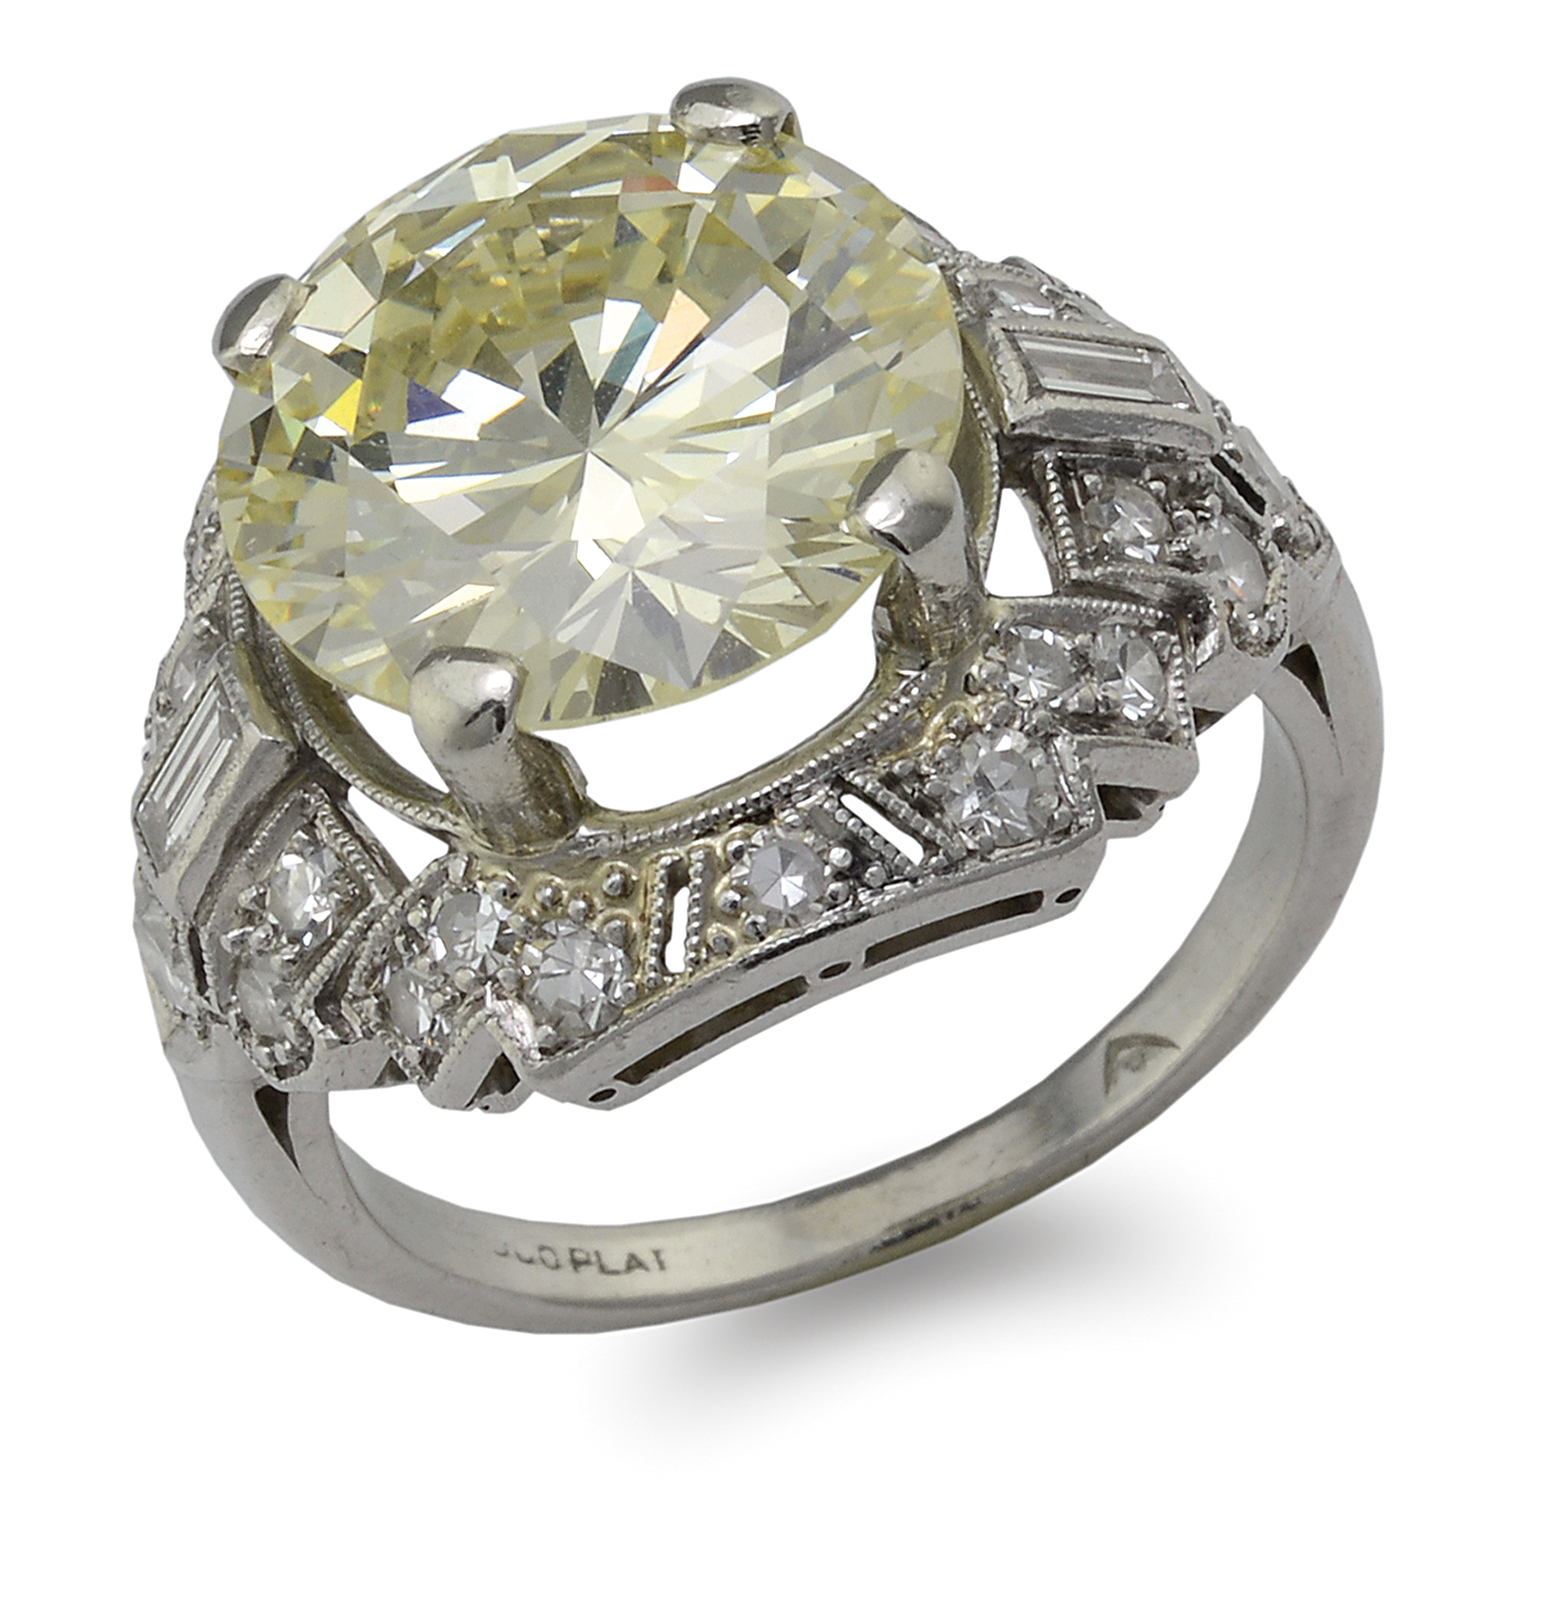 PLATINUM CAPE DIAMOND RING REALIZED $20,145.